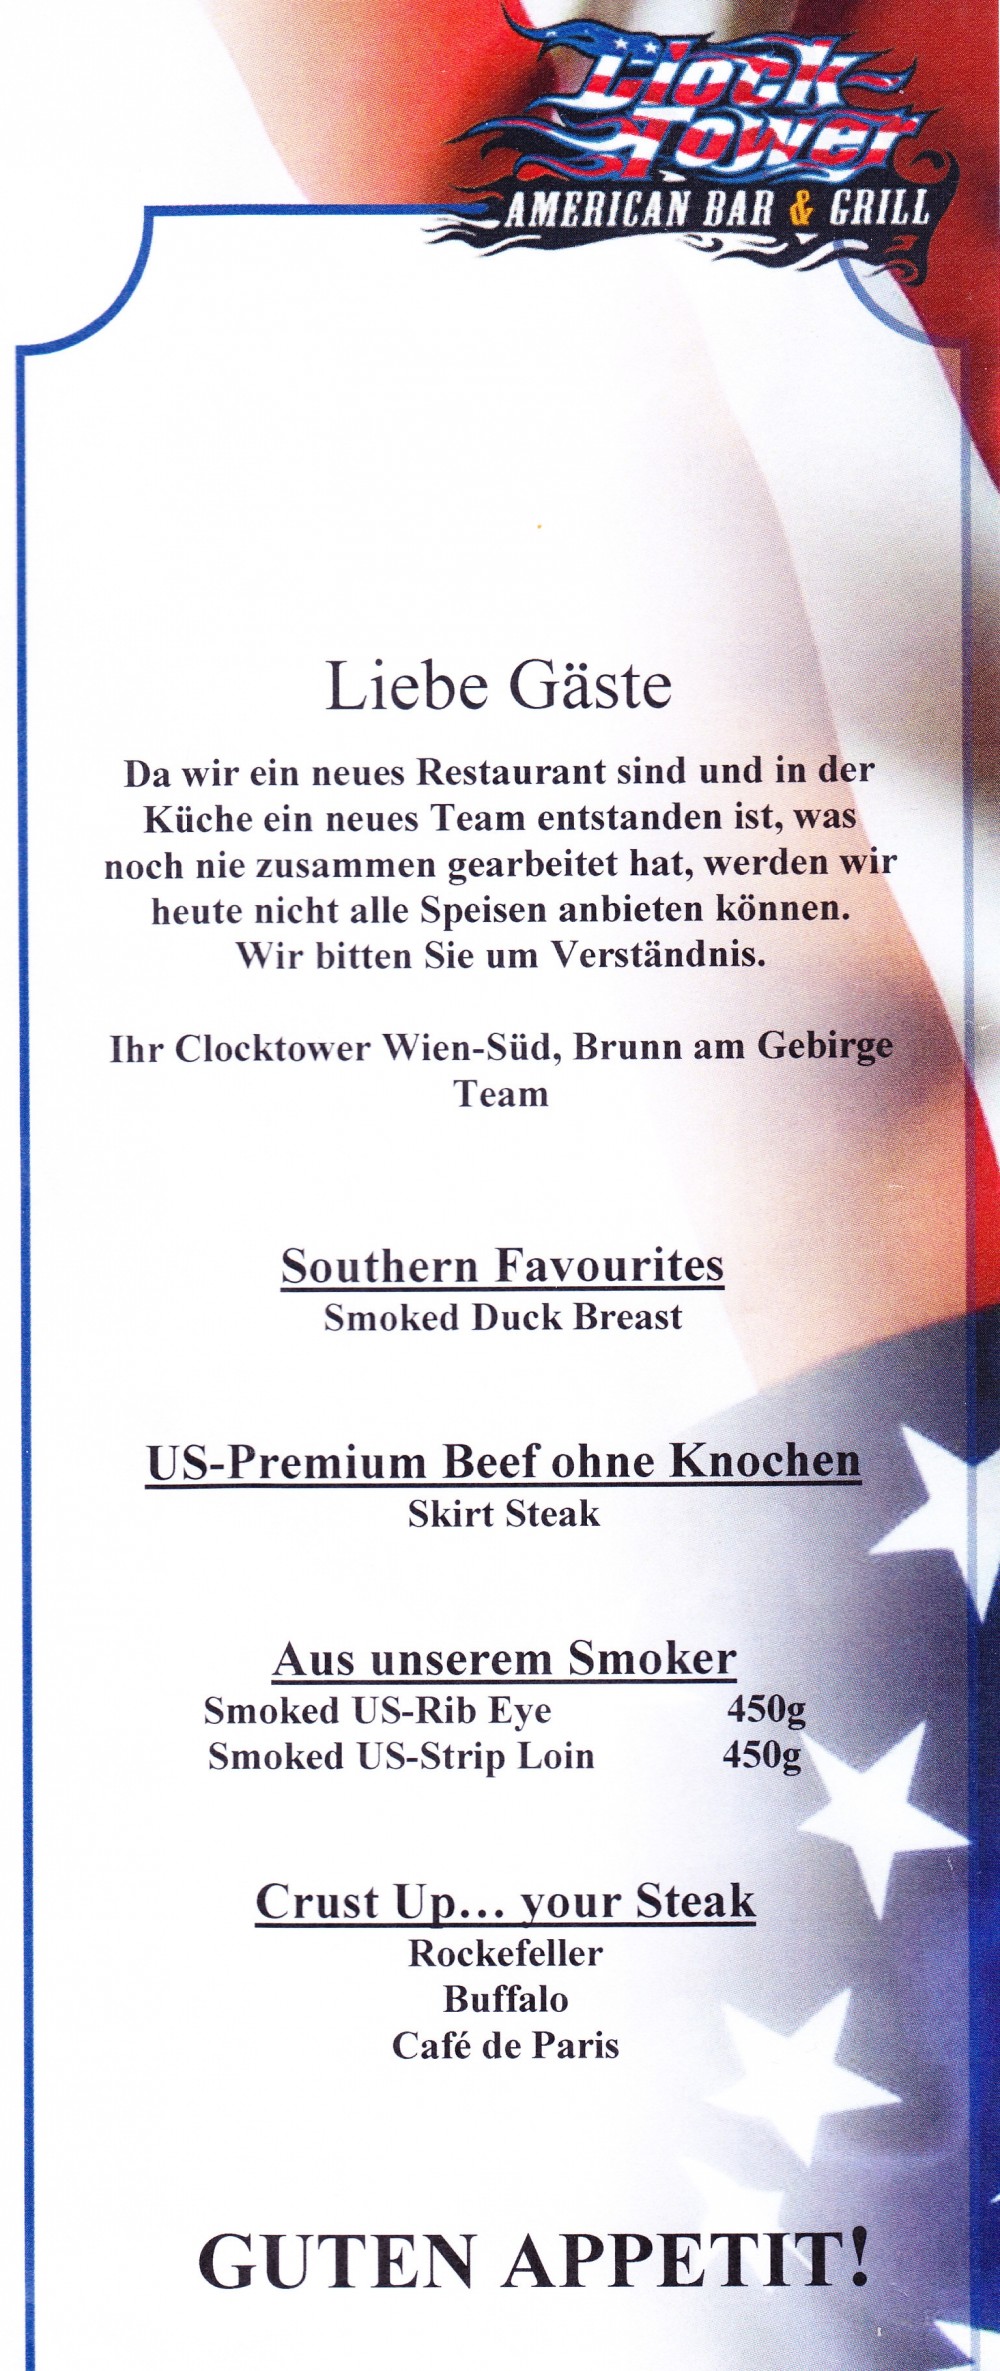 ClockTower - Kundeninformation - Clocktower American Bar & Grill - Wien-Süd - Brunn am Gebirge